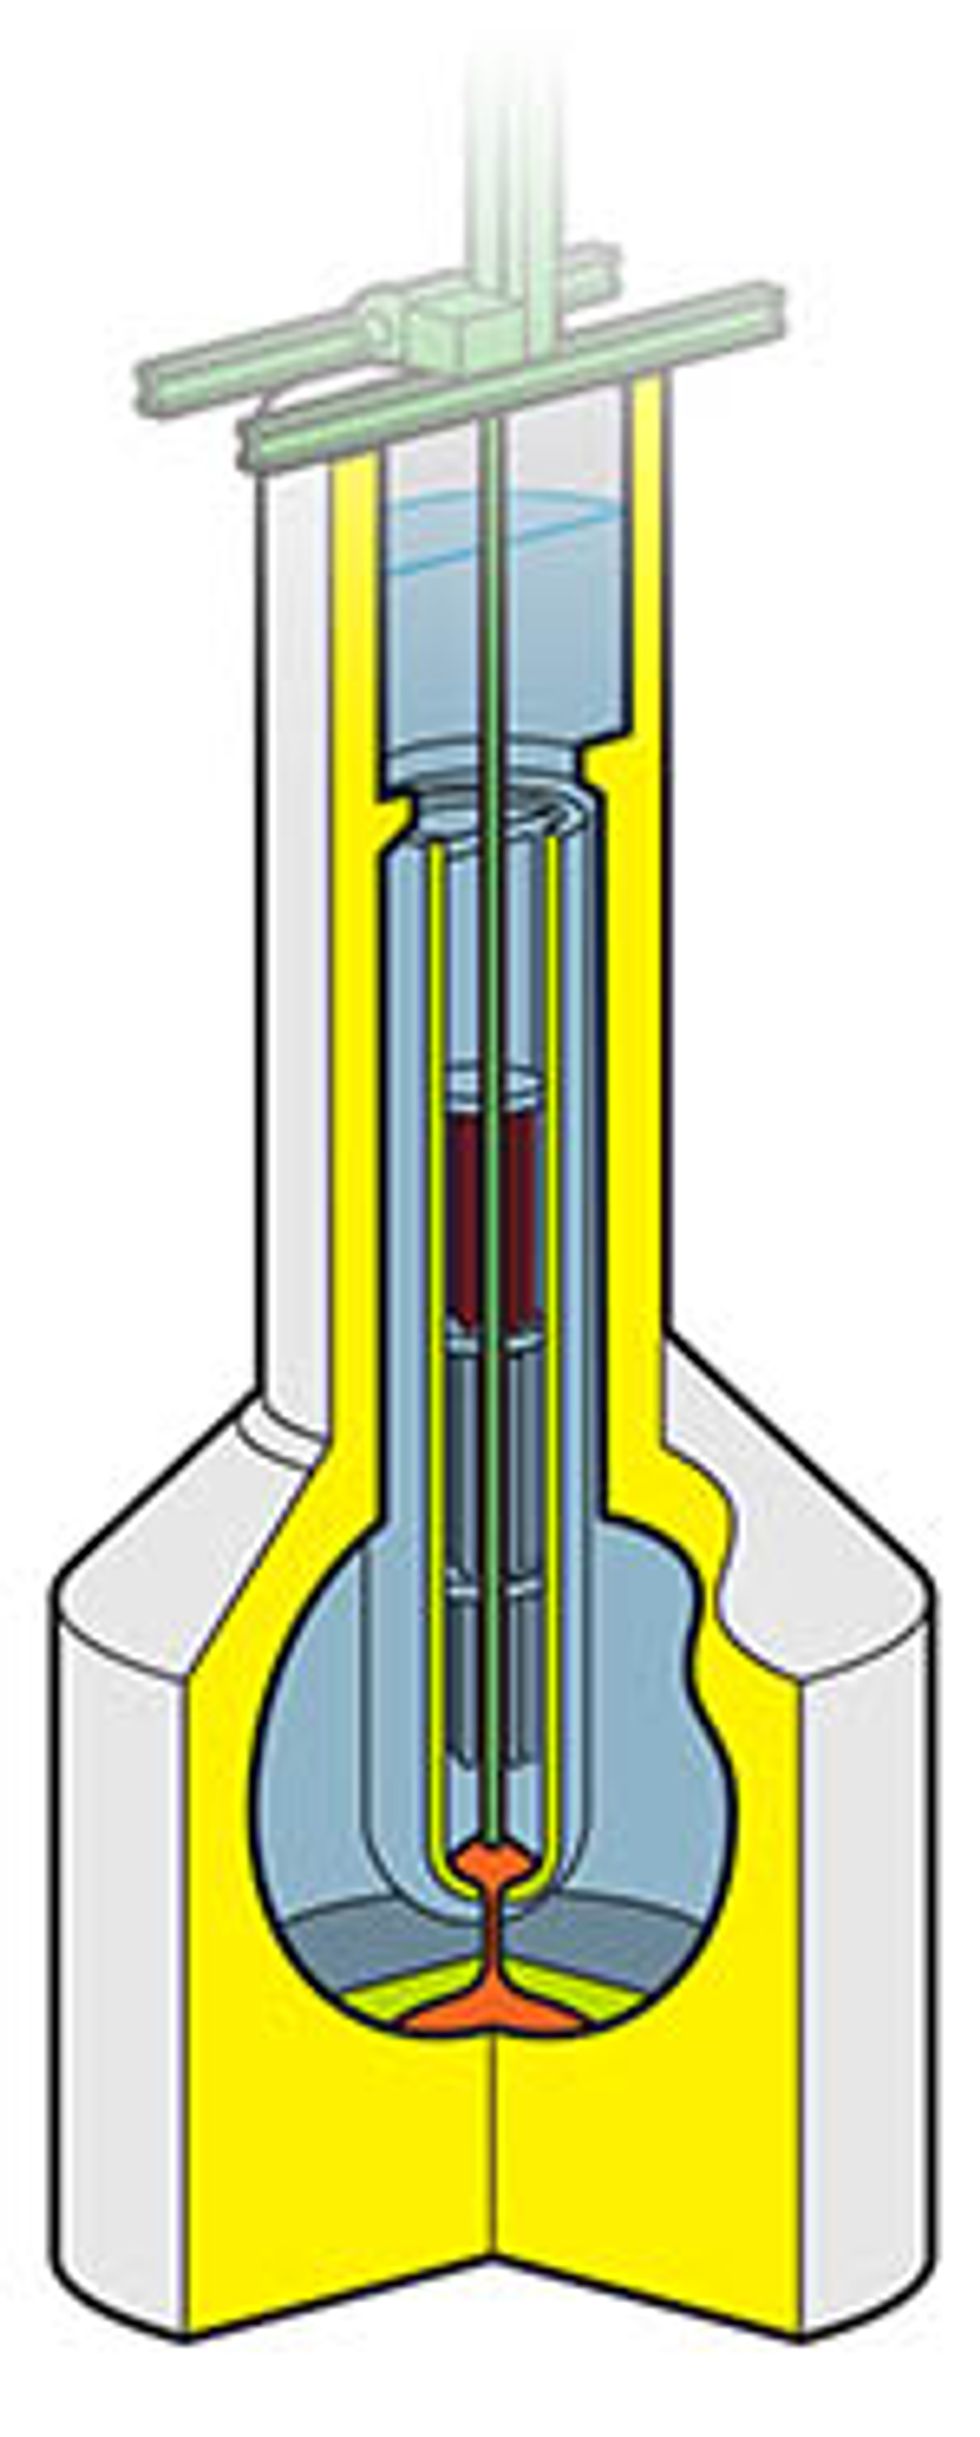 Reactor Graphic